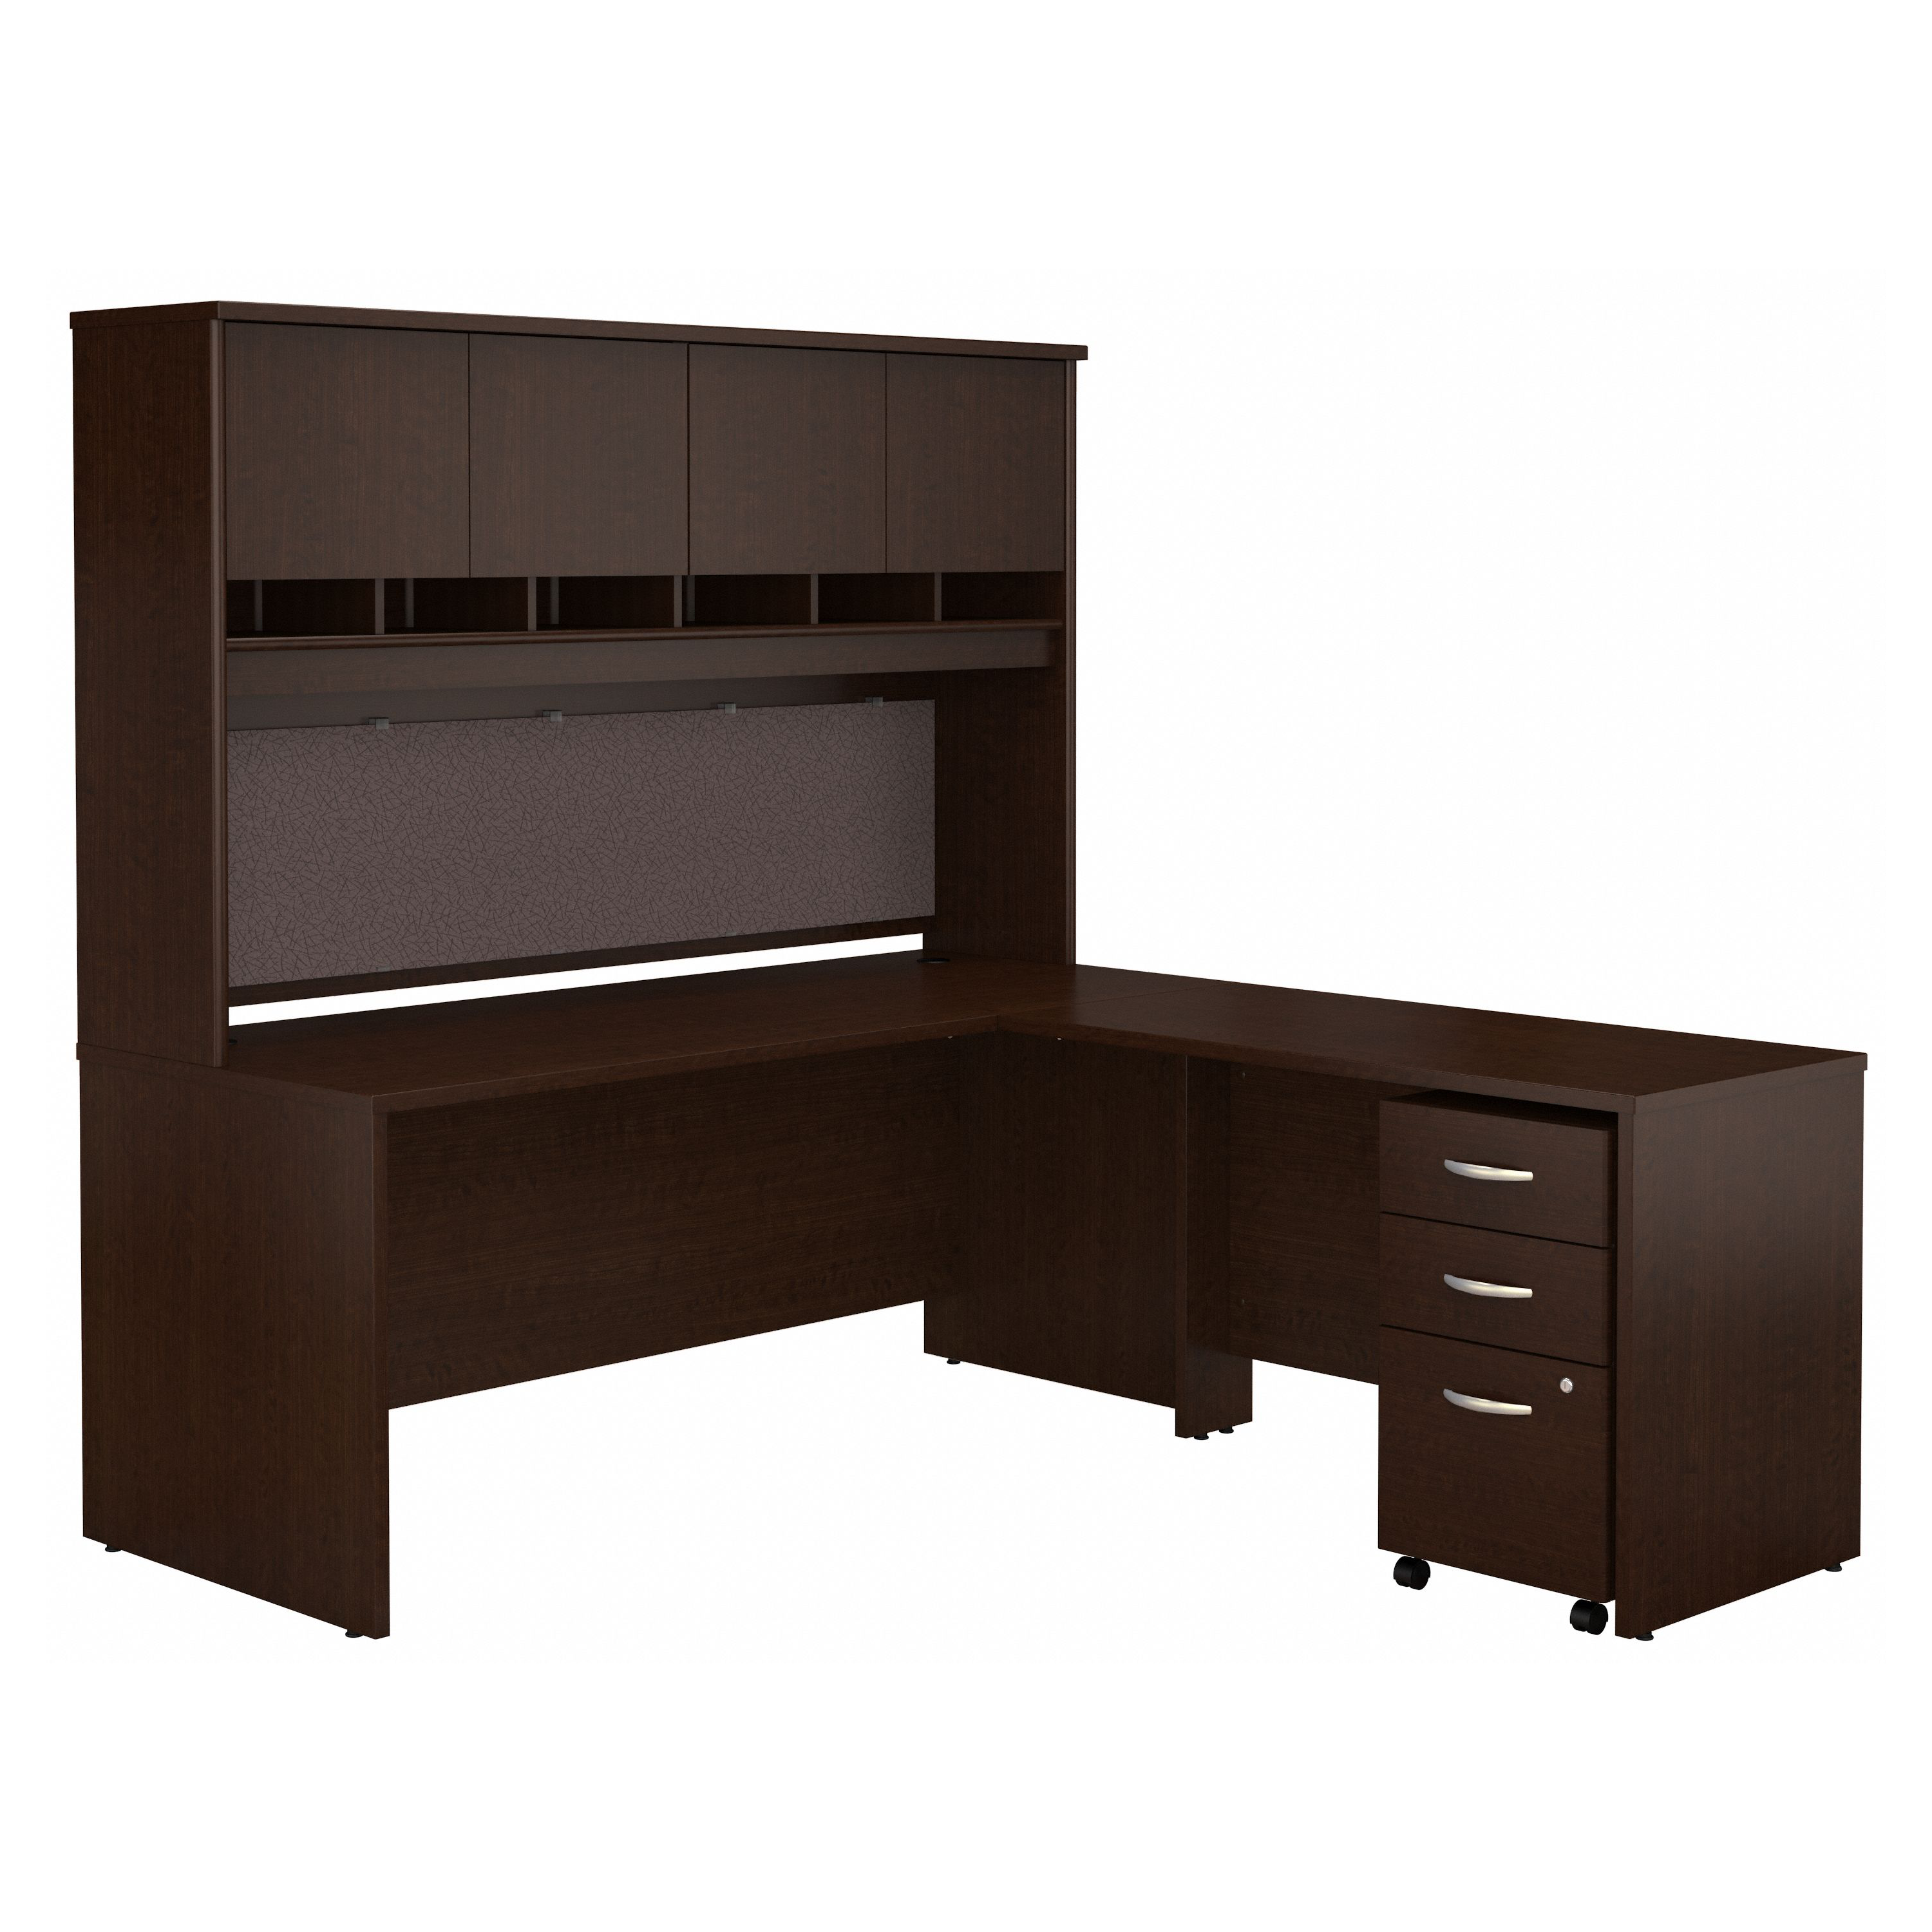 Shop Bush Business Furniture Series C 72W L Shaped Desk with Hutch and Mobile File Cabinet 02 SRC0018MRSU #color_mocha cherry